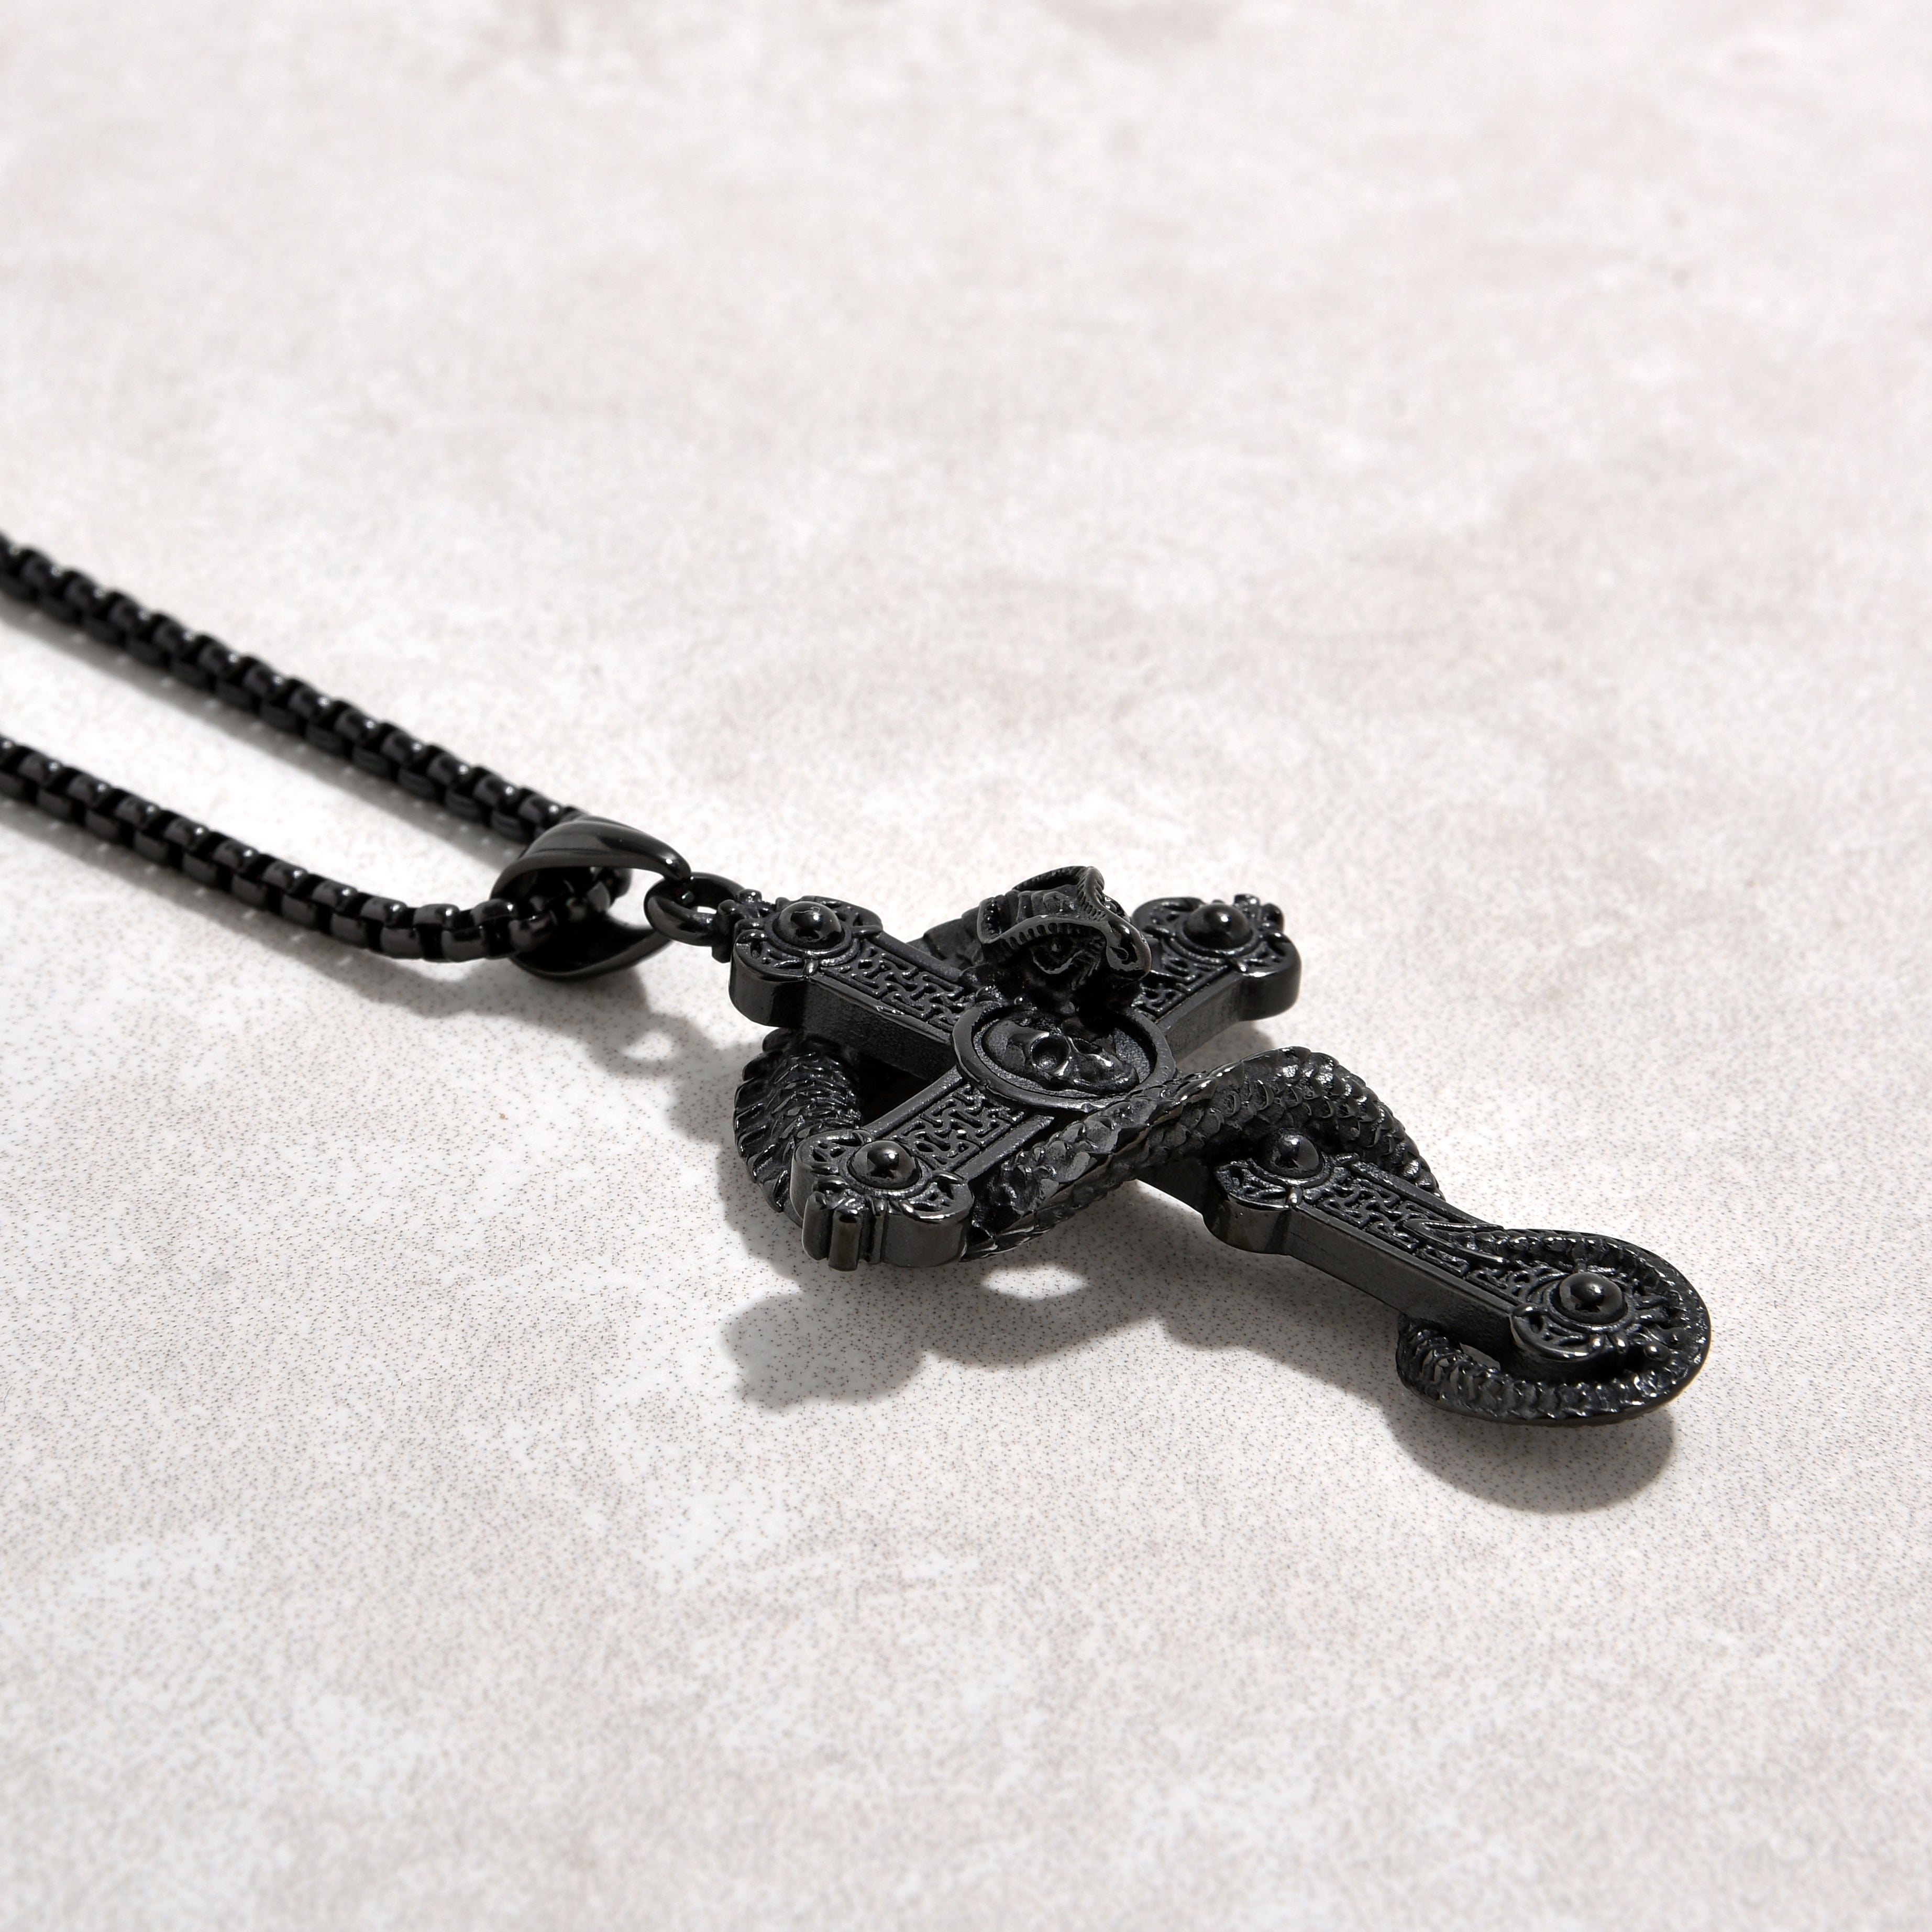 Kalifano Steel Hearts Jewelry Black Dragon Cross Steel Hearts Necklace SHN515-B